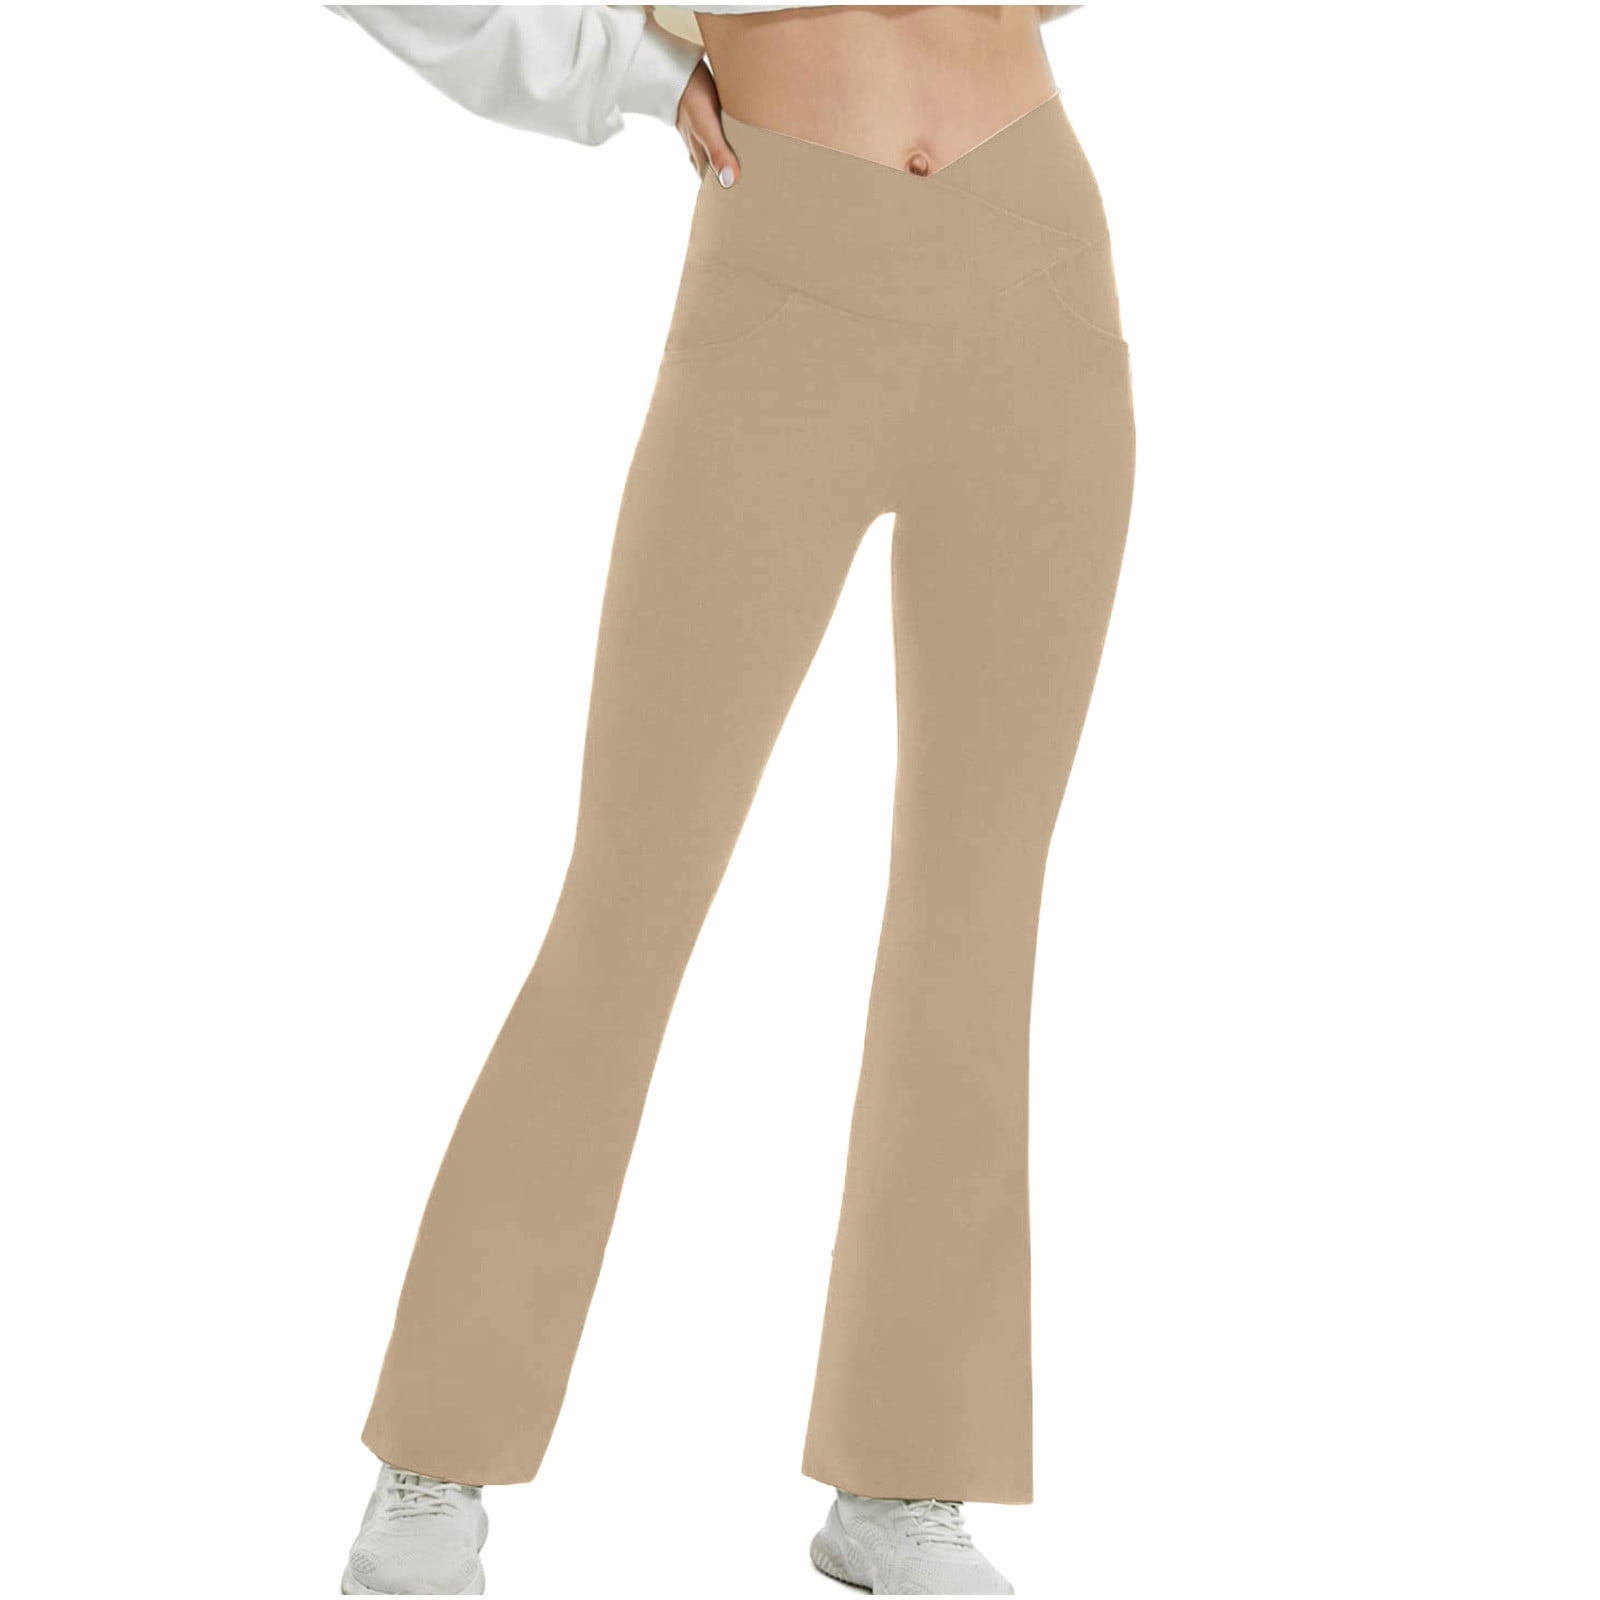 Reduce Price Hfyihgf Women's Bootcut Yoga Pants-Flare Leggings for Women  High Waisted Crossover V-Back Workout Lounge Bell Bottom Jazz Dress  Pants(Dark Gray,L) 